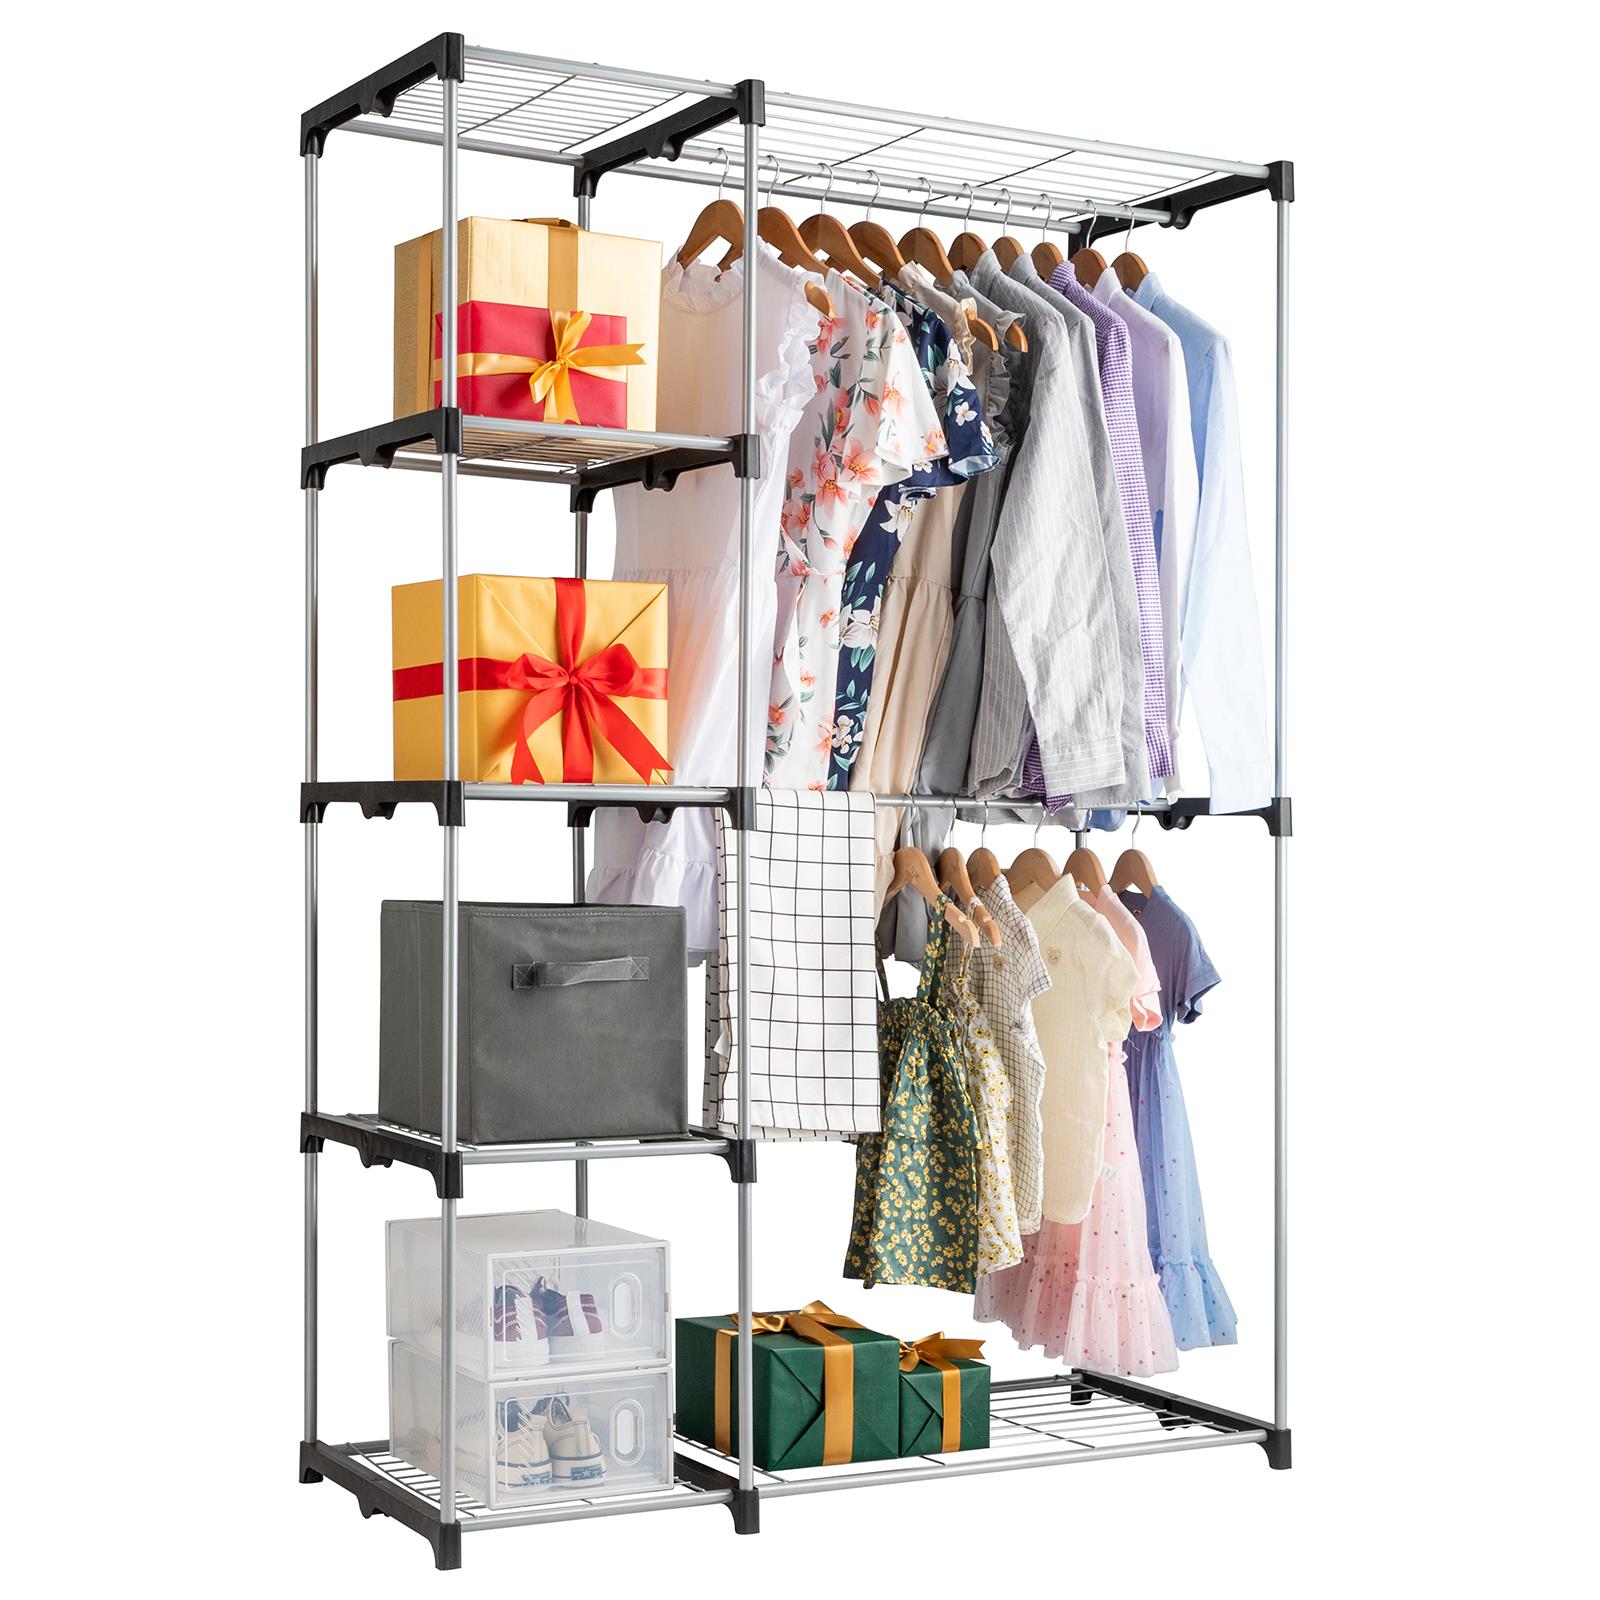 Zimtown Silver Portable Closet Organizer Storage Clothes Hanger Garment Shelf Rail Rack - image 1 of 13